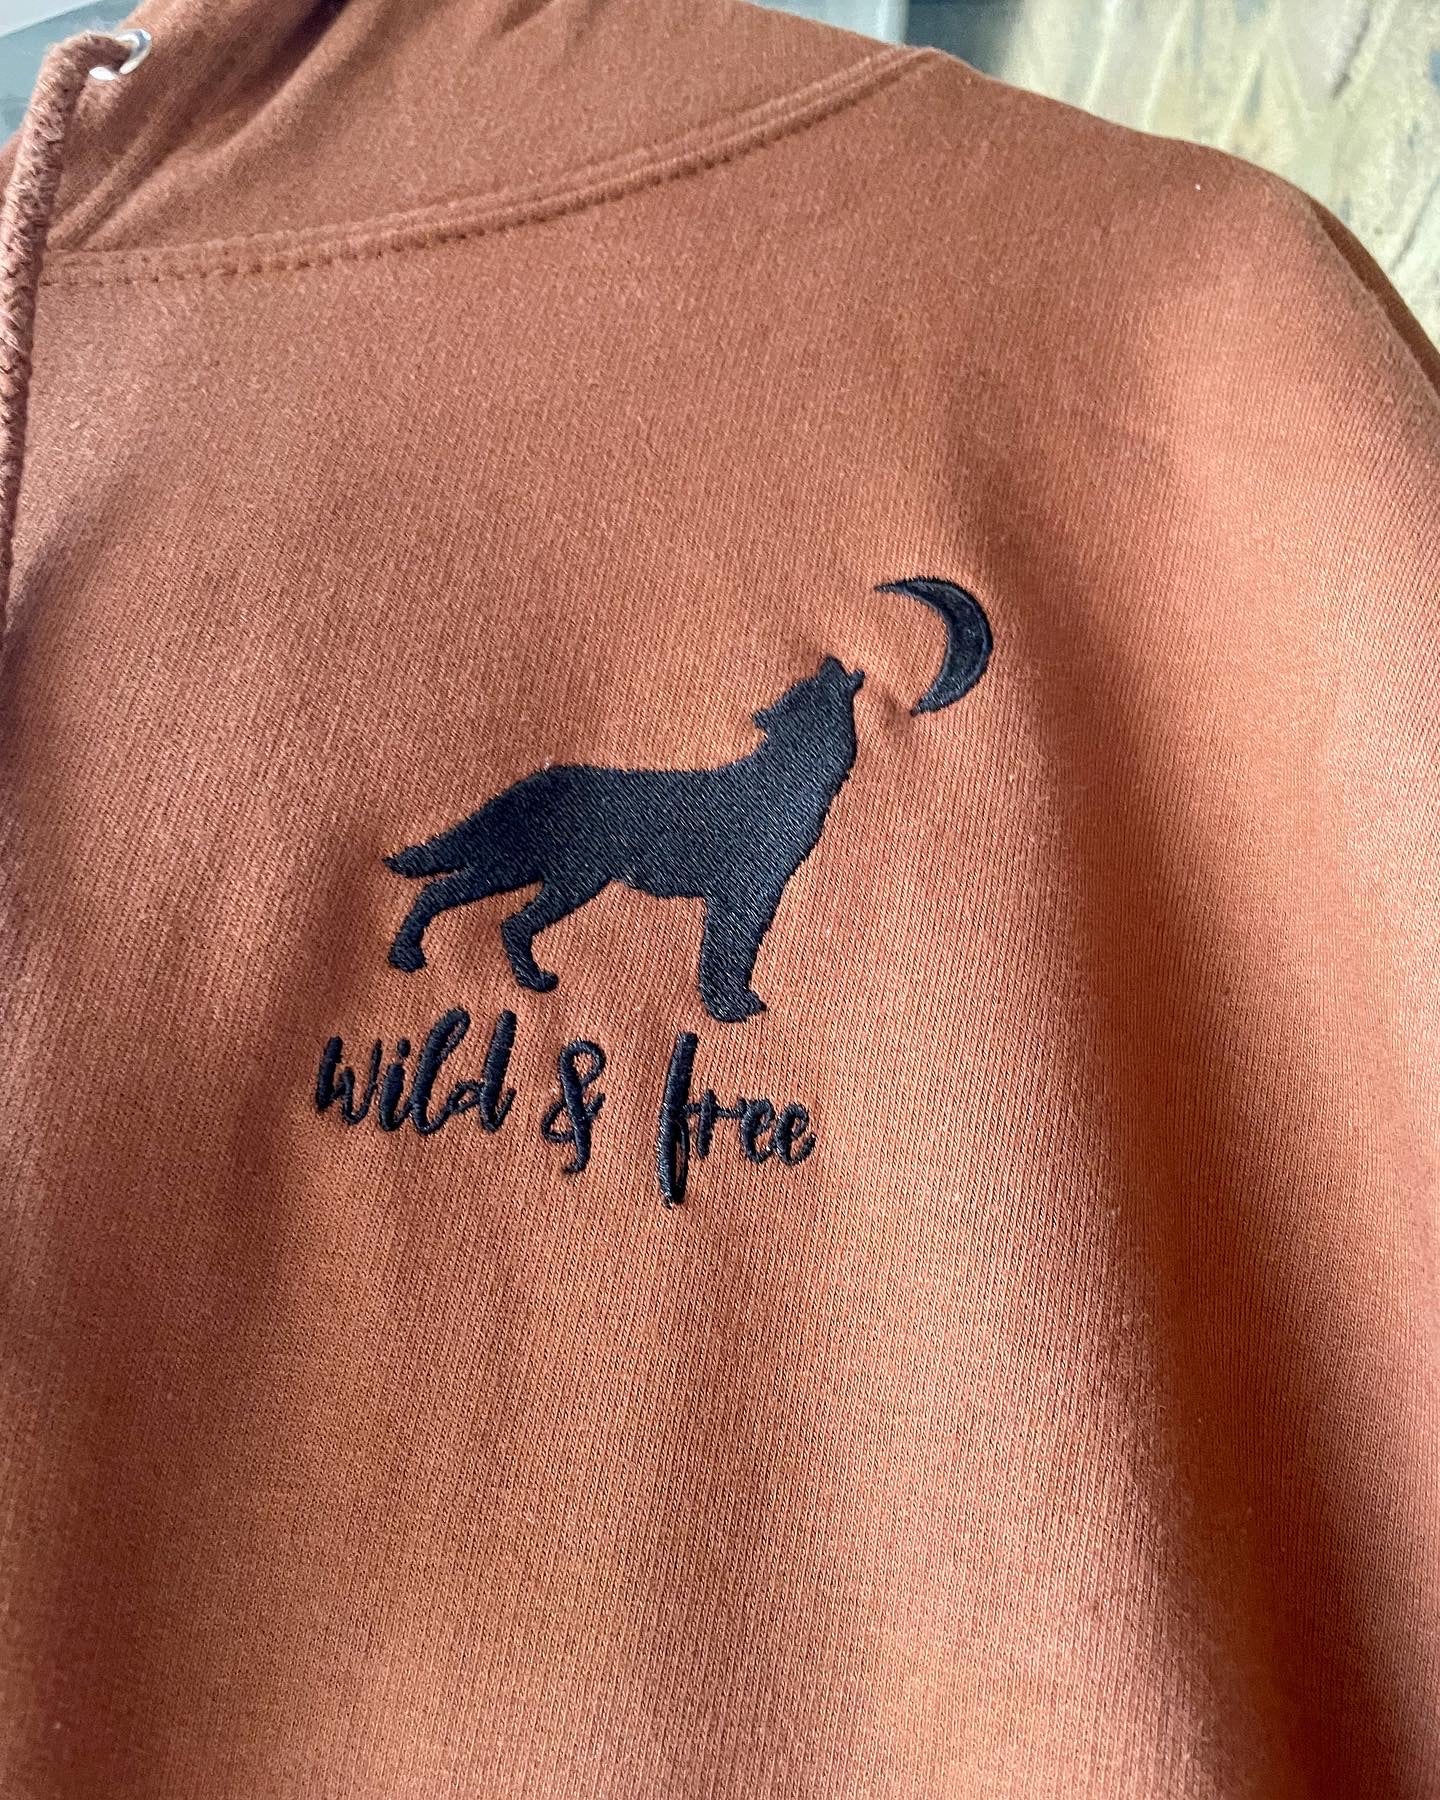 Wanderlust Wild & Free embroidered matching hoodie